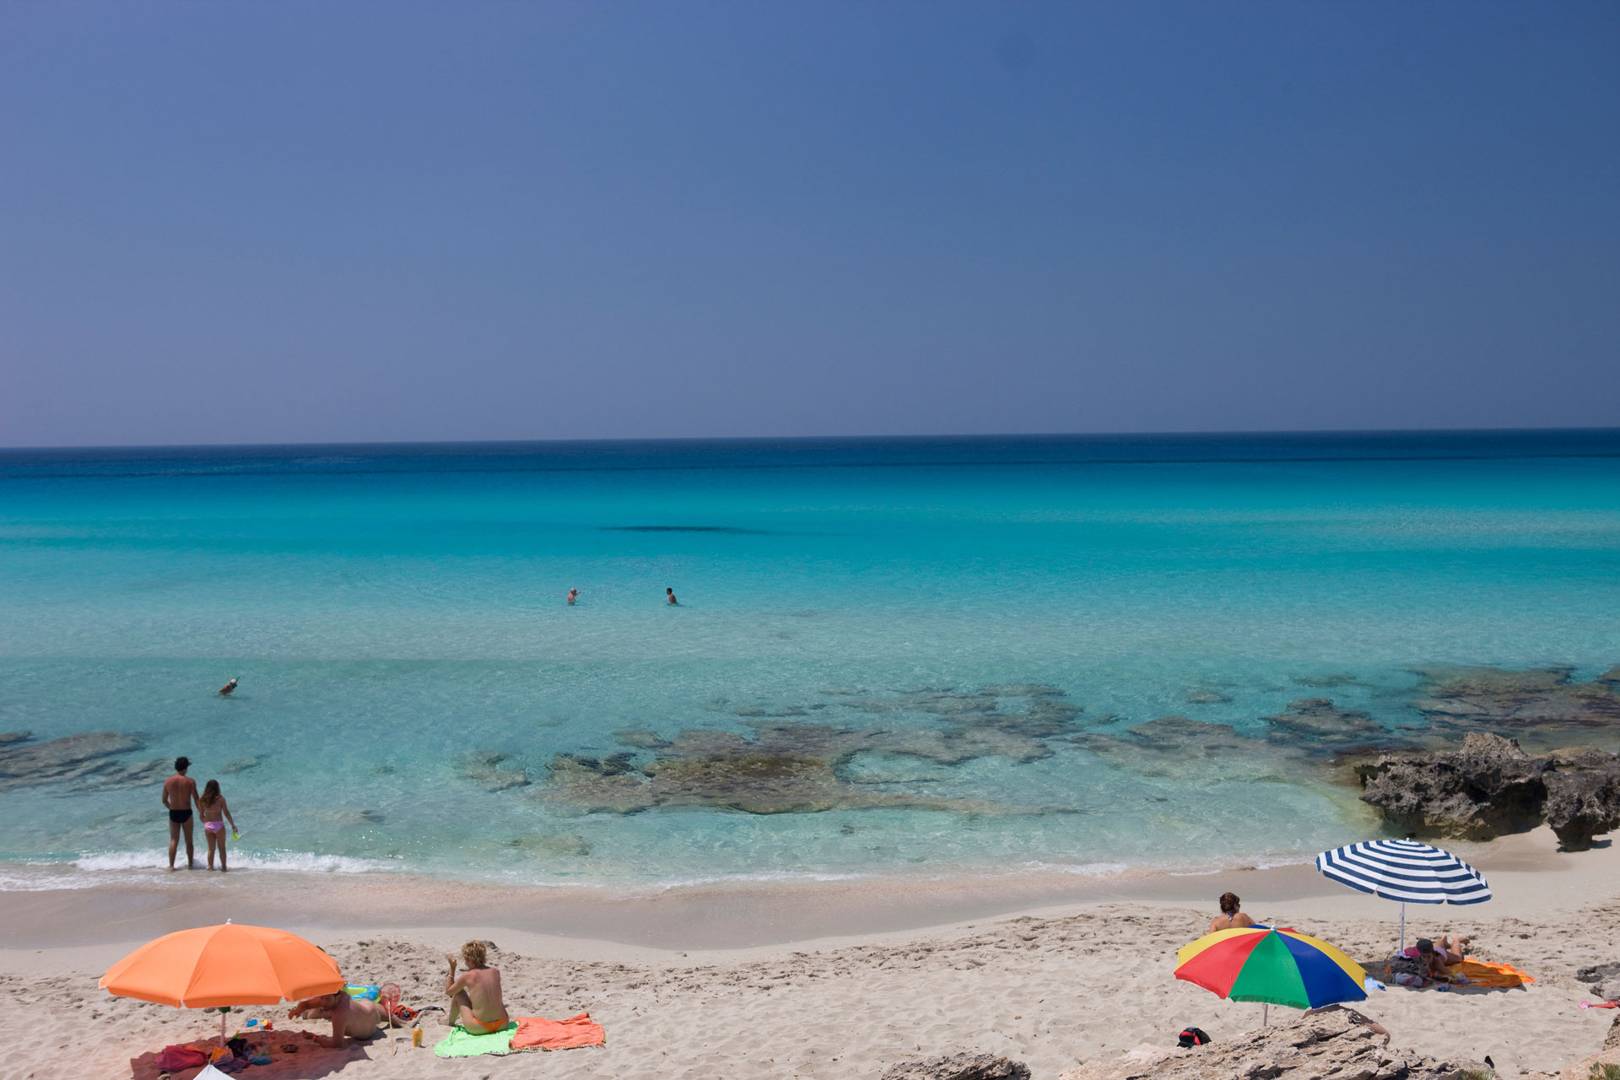 Sleeping Nudist Beach - Best beaches in Formentera, Spain | CN Traveller